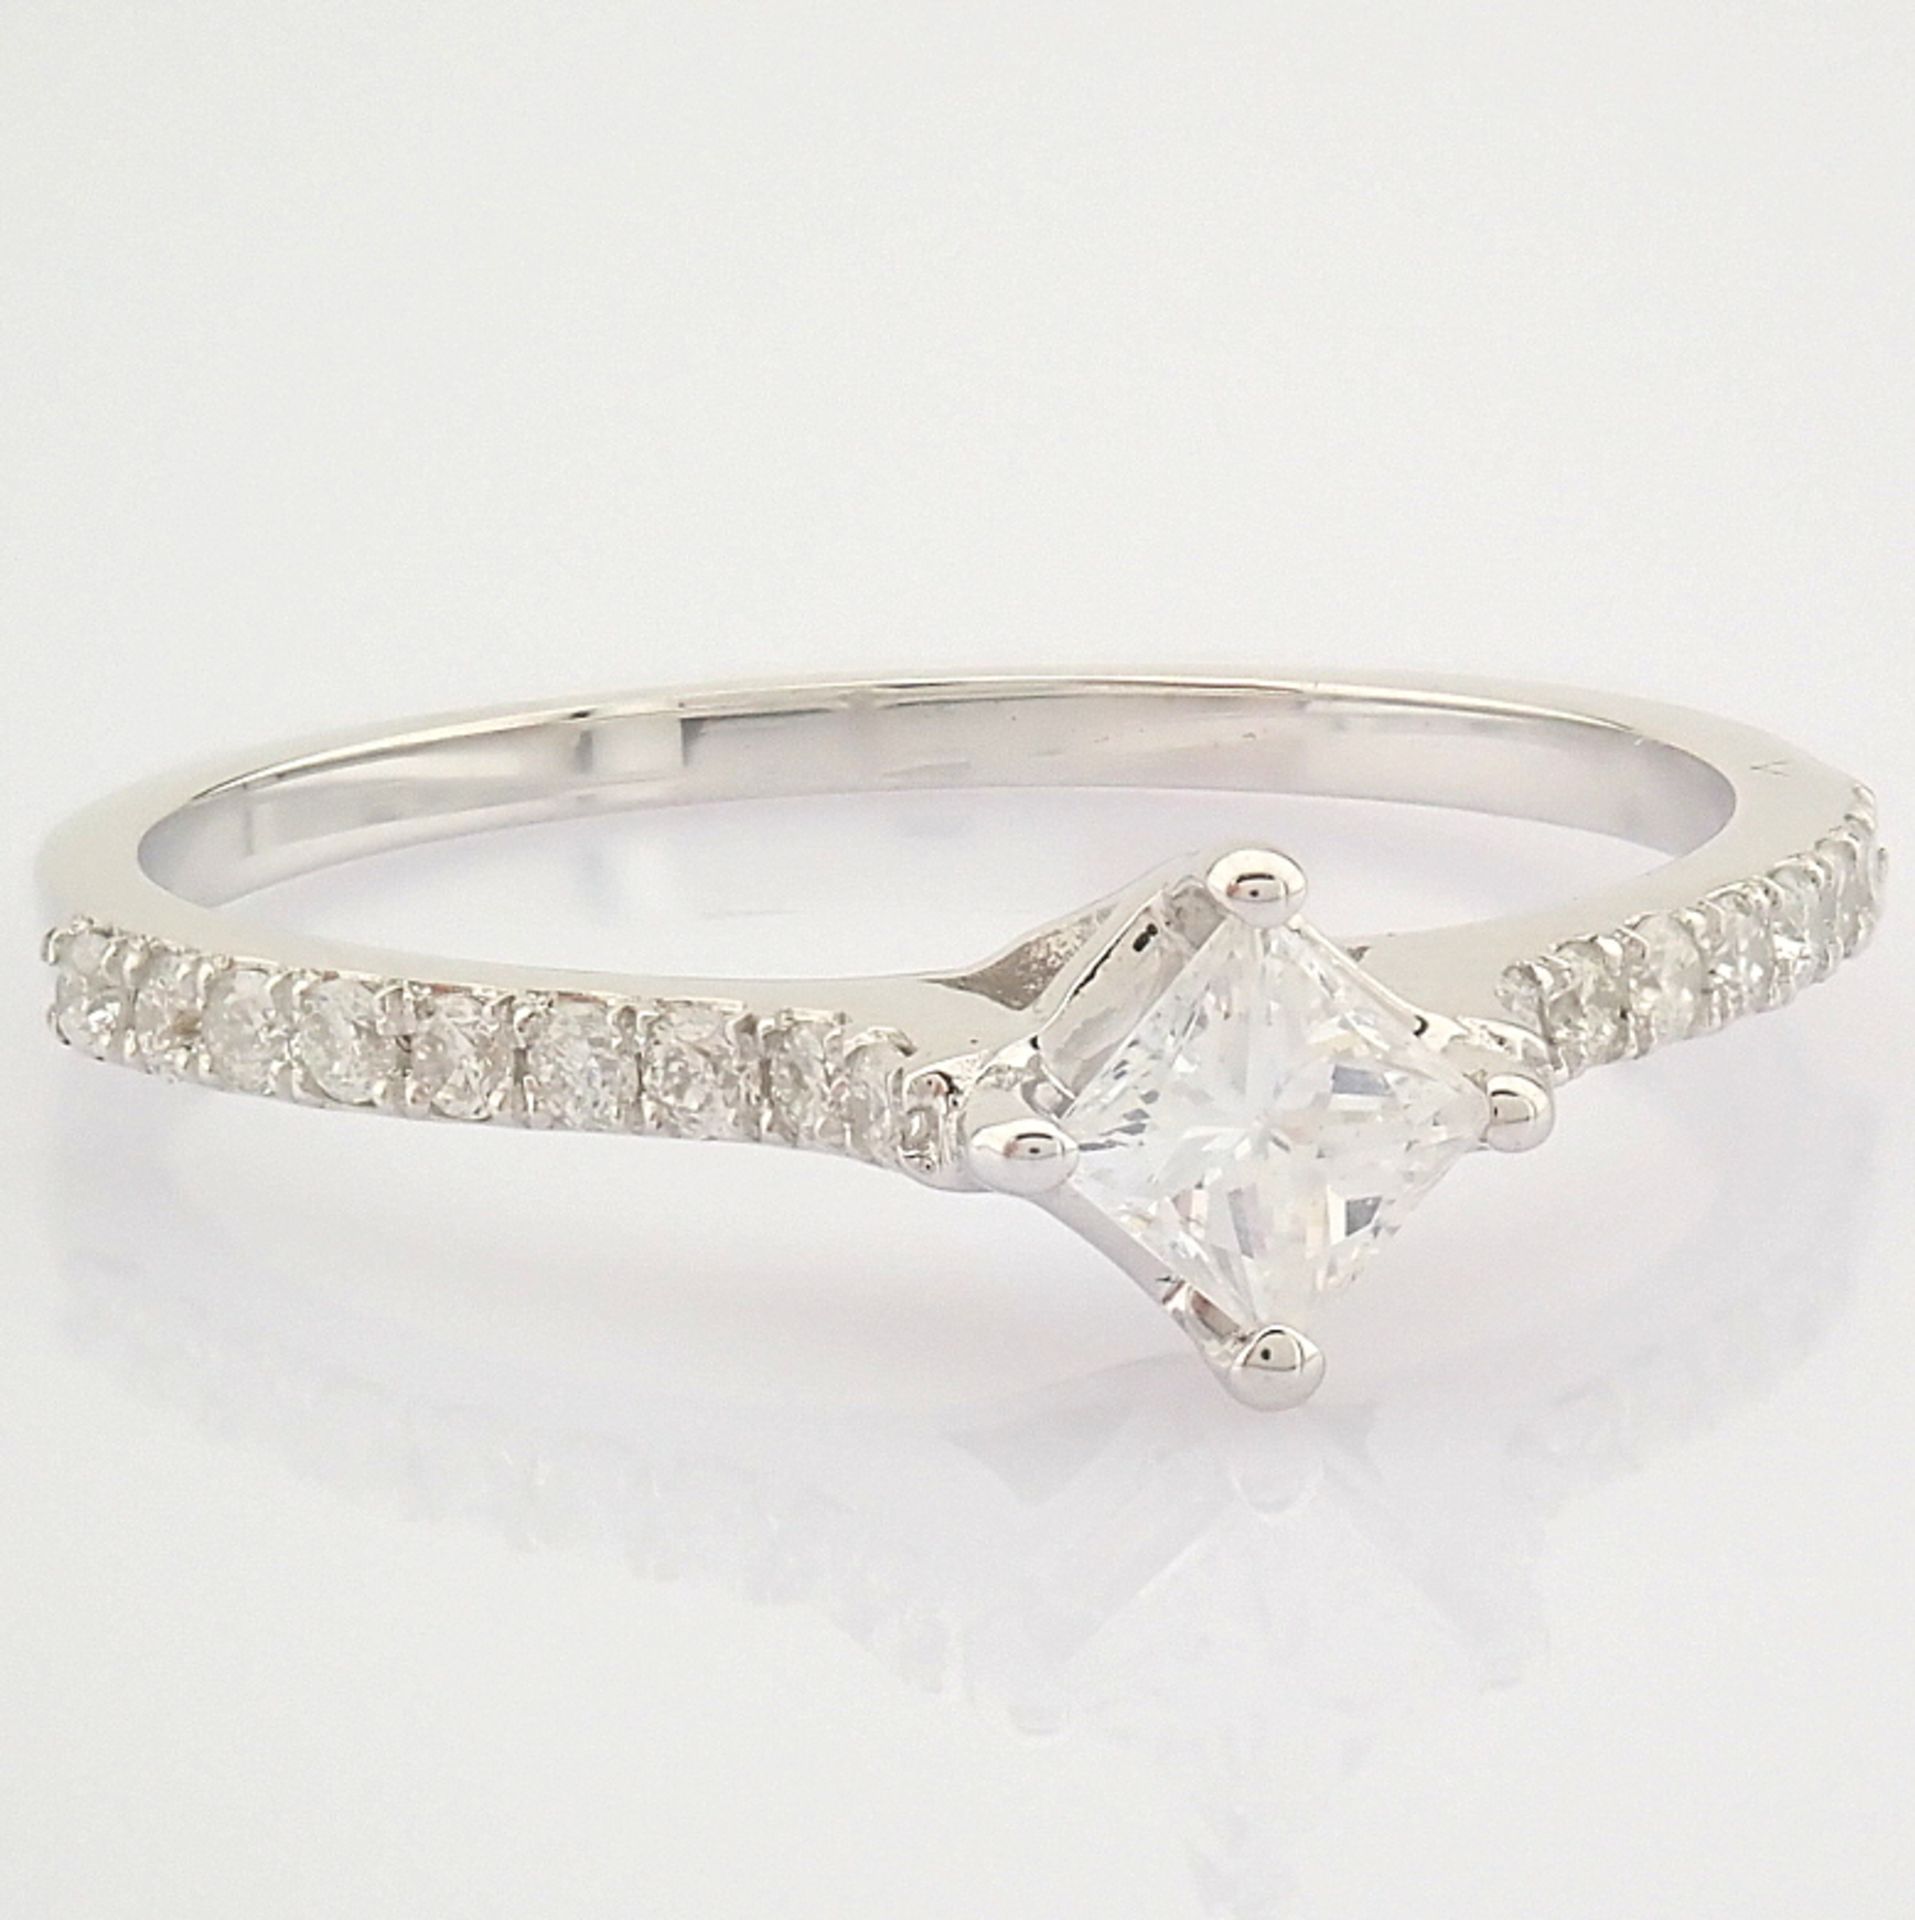 Certificated 14K White Gold Princess Cut Diamond & Diamond Ring (Total 0.4 ct Stone) - Image 8 of 9